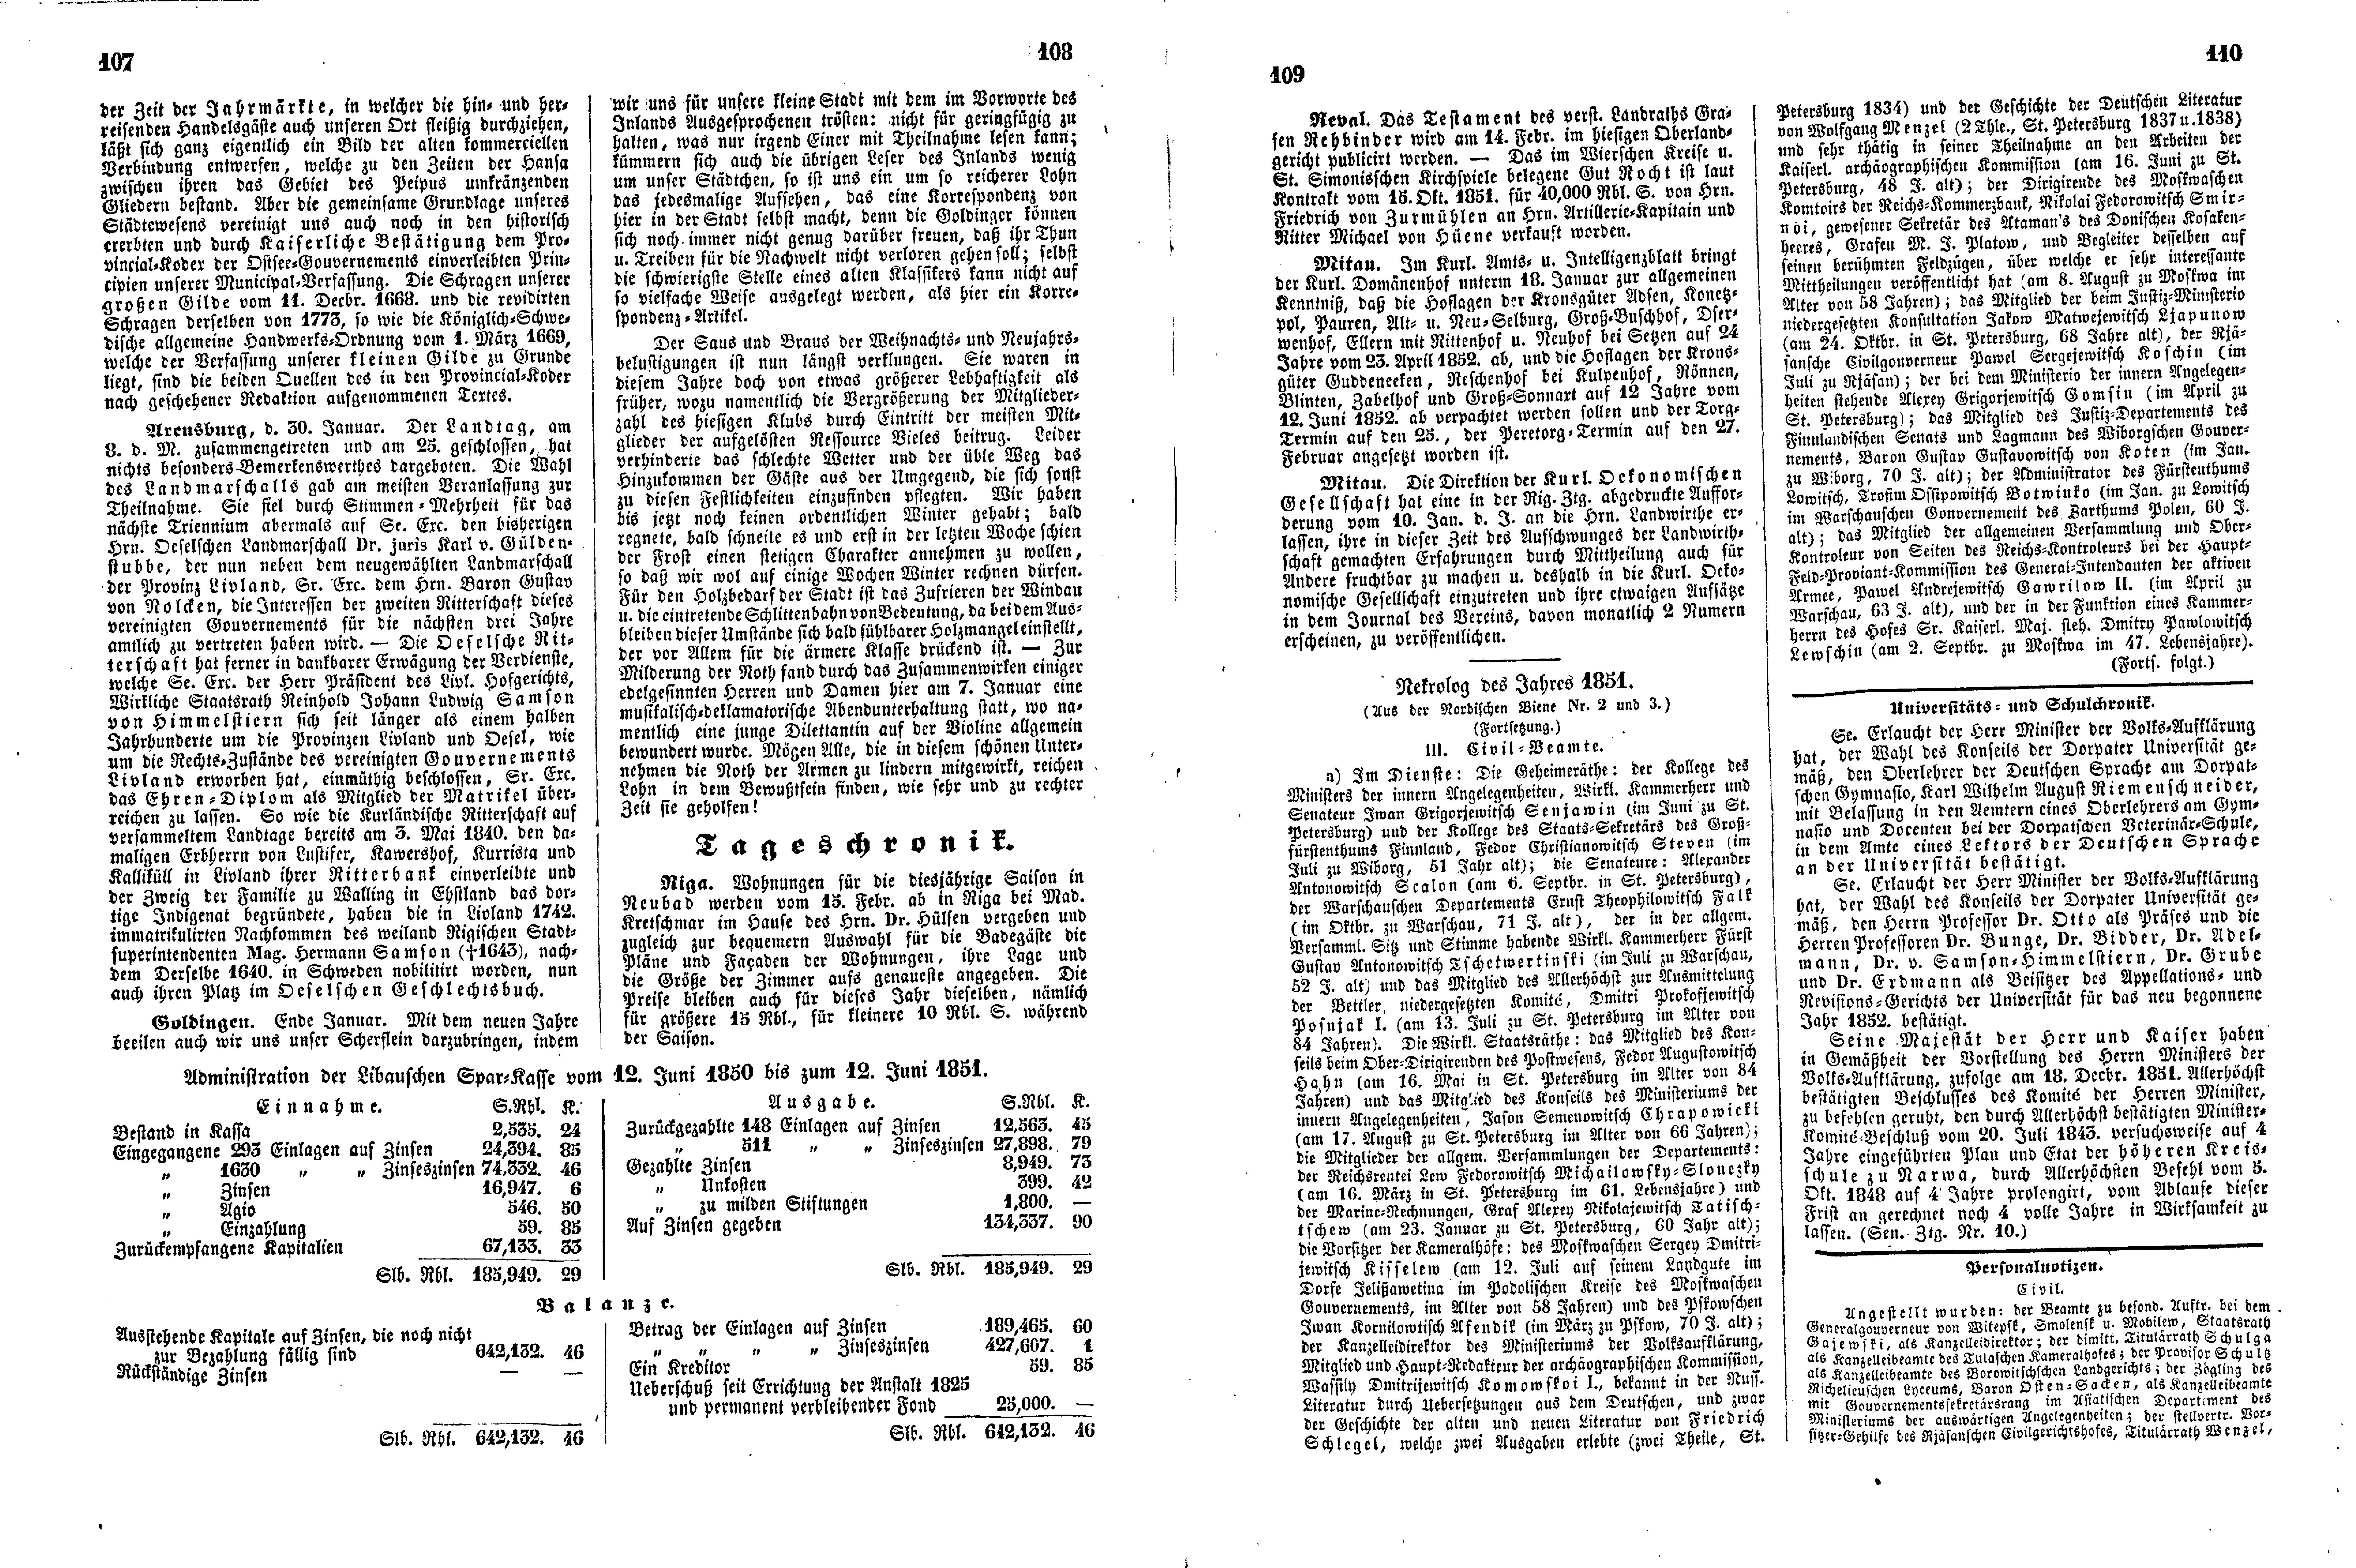 Das Inland [17] (1852) | 31. (107-110) Main body of text